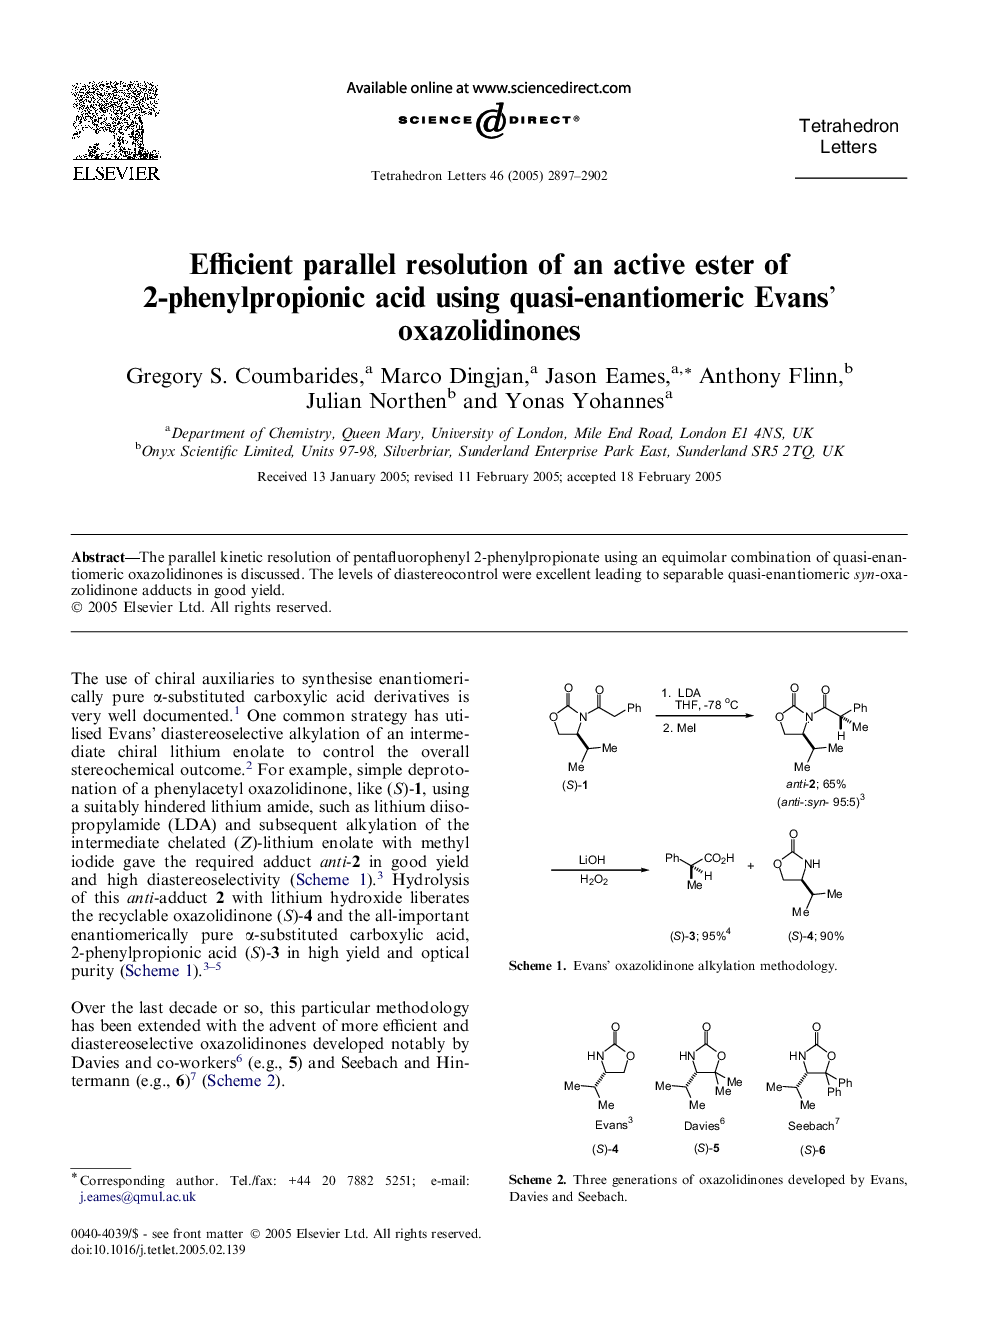 Efficient parallel resolution of an active ester of 2-phenylpropionic acid using quasi-enantiomeric Evans' oxazolidinones